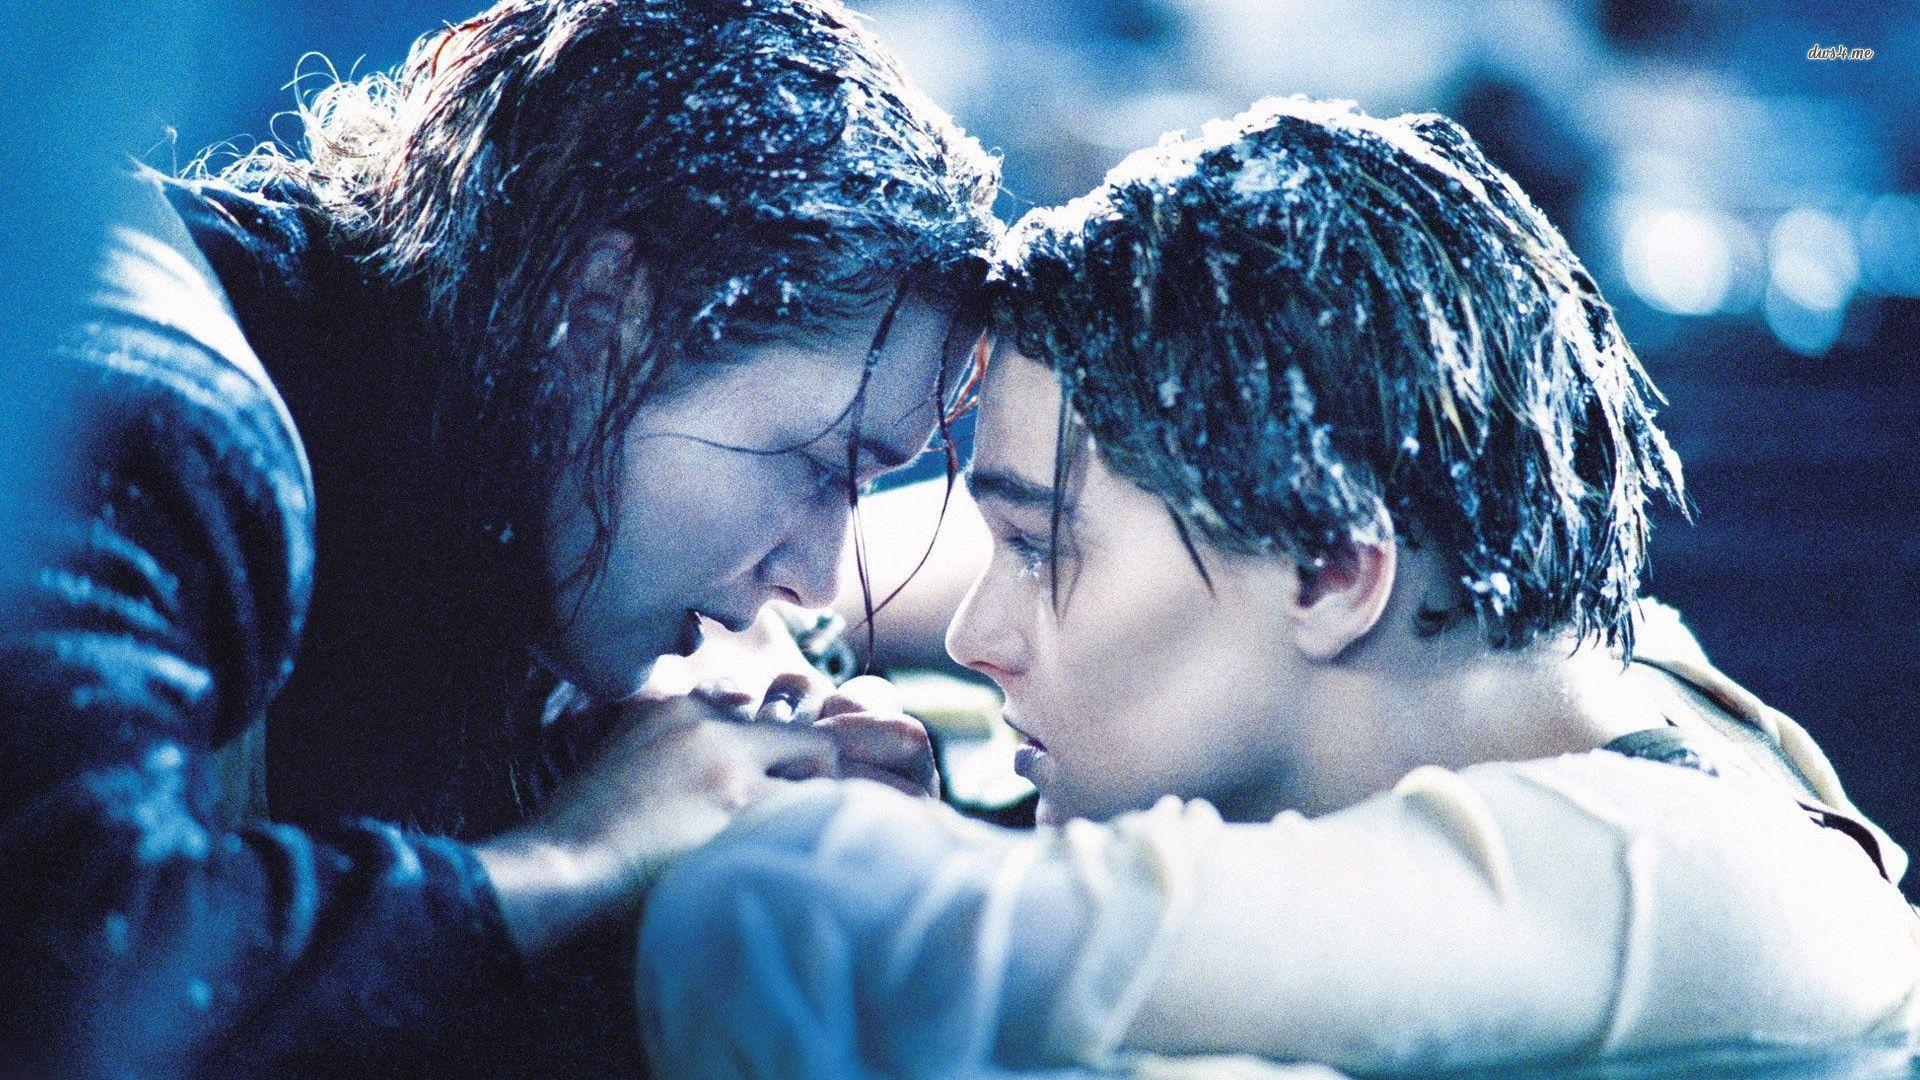 Titanic Movie Image (24)